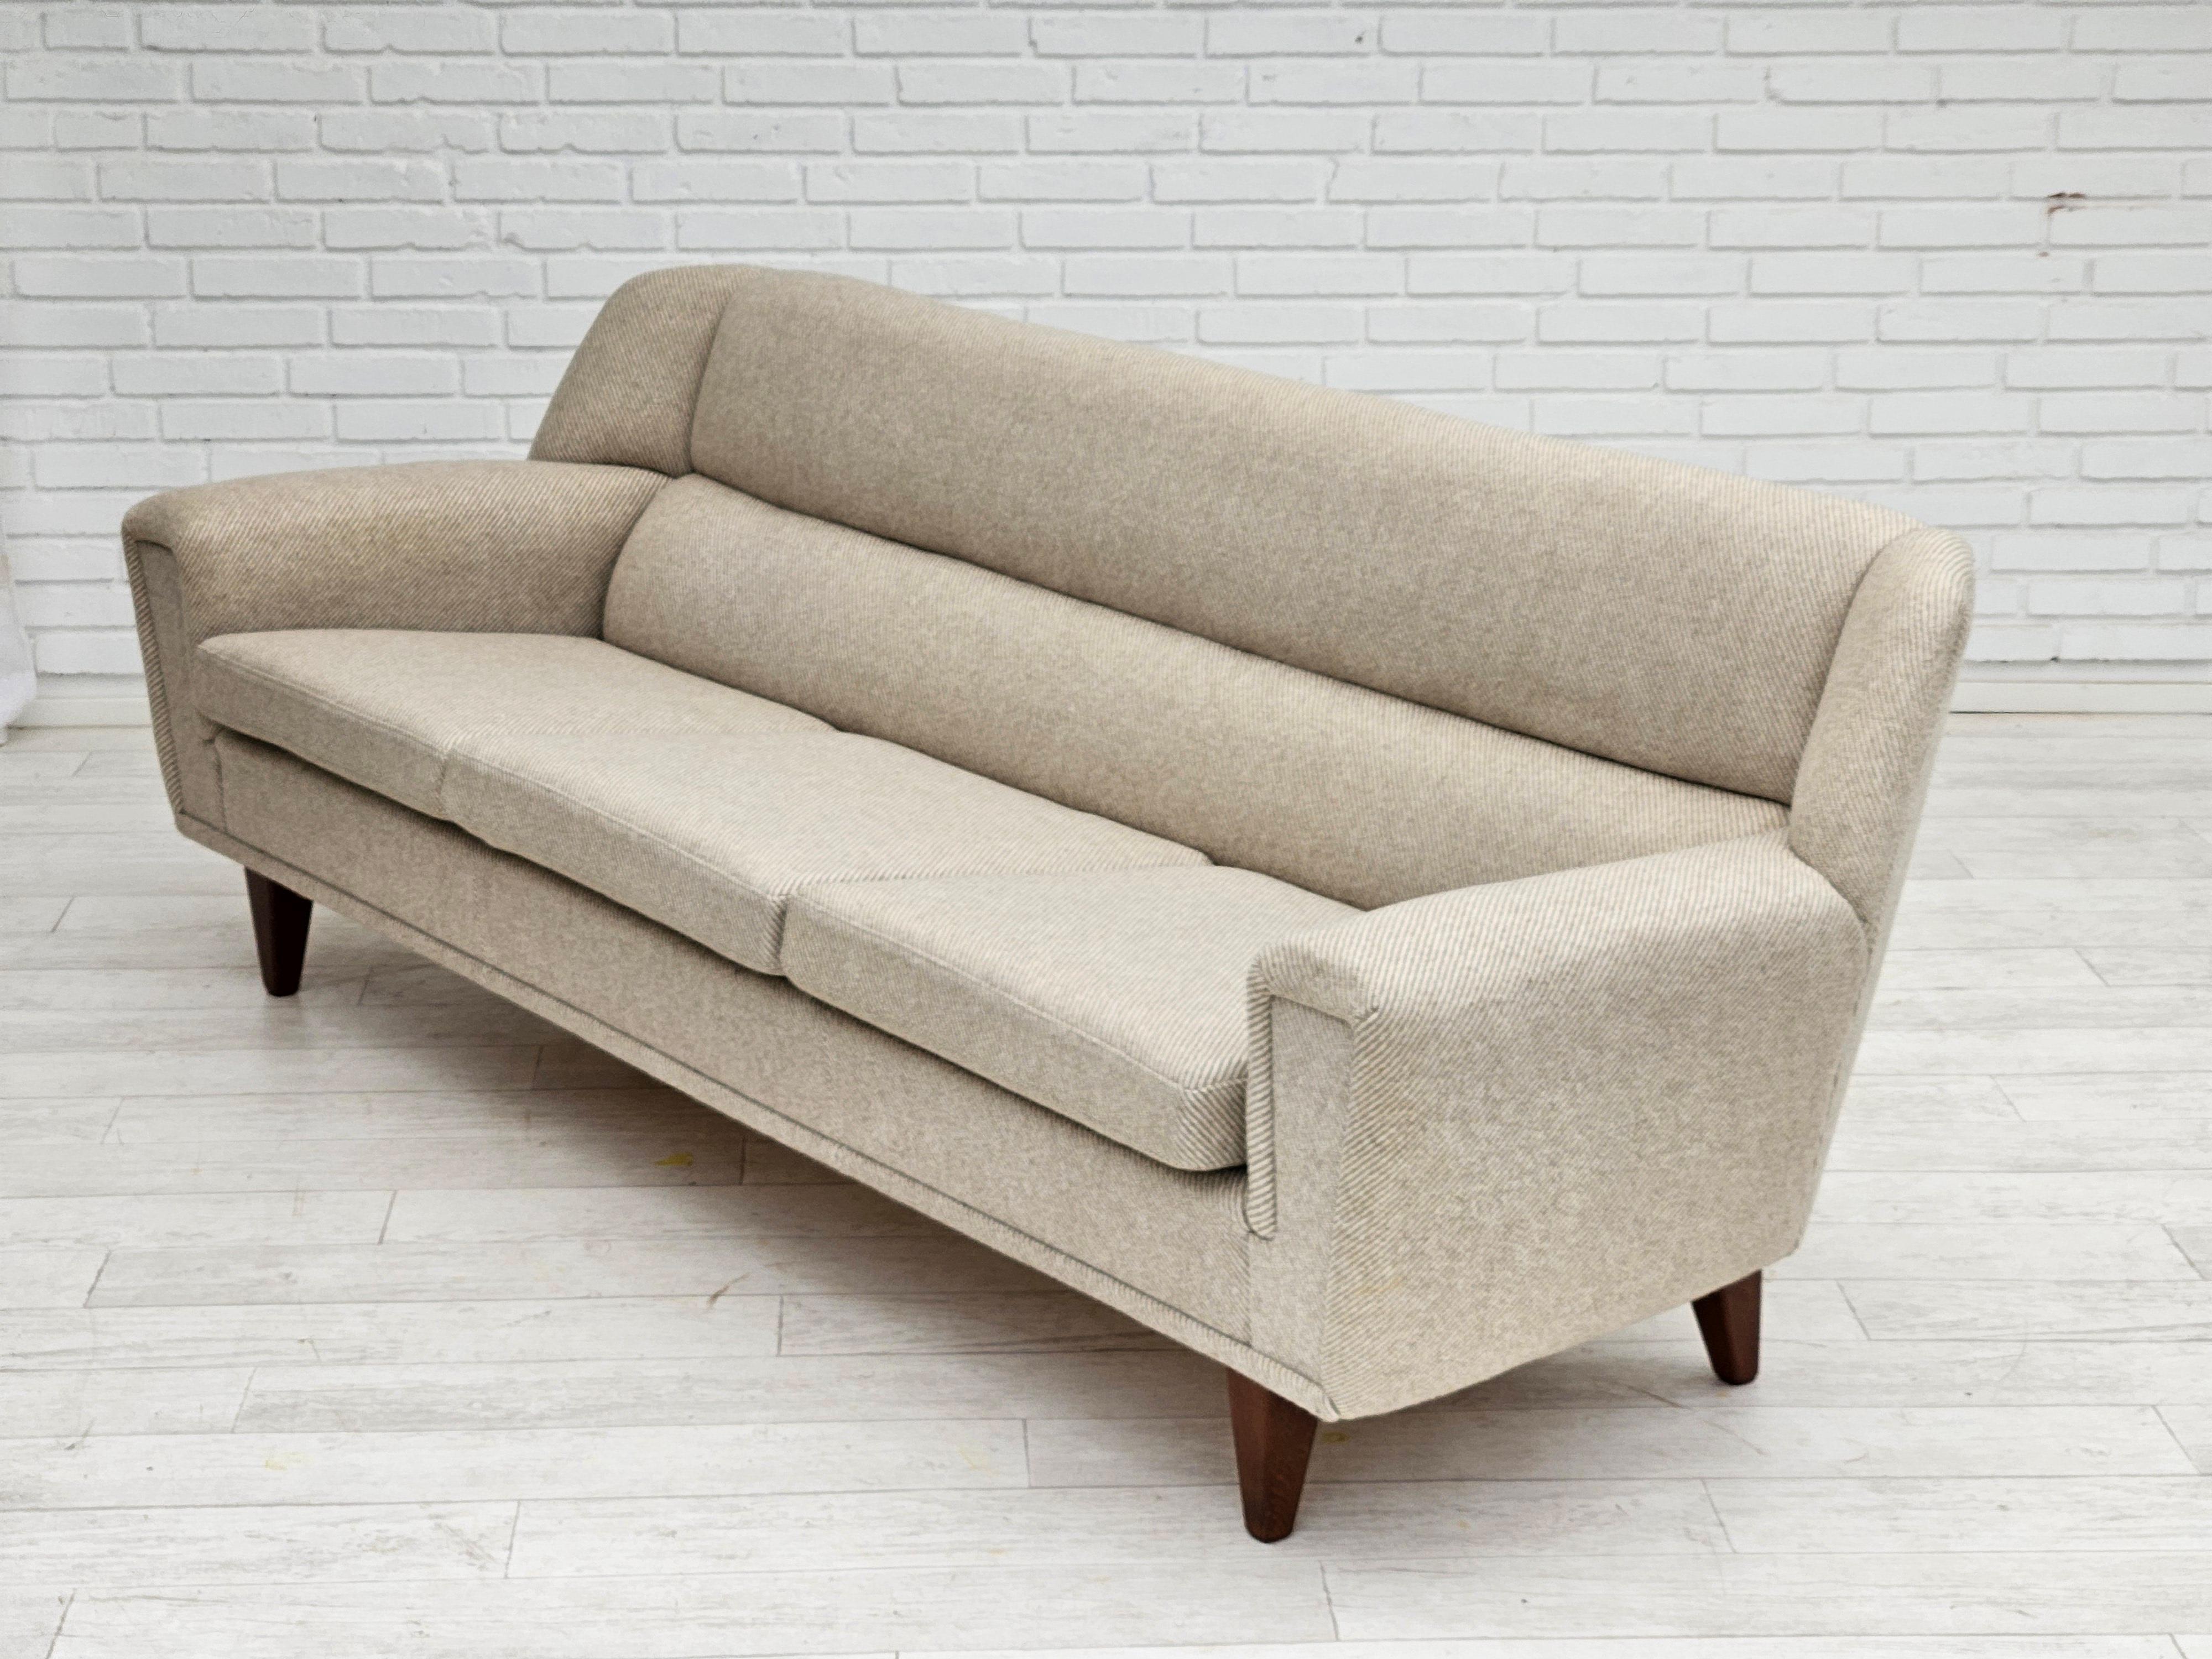 1960s, Danish design sofa by Kurt Østervig model 61, original good condition. 9